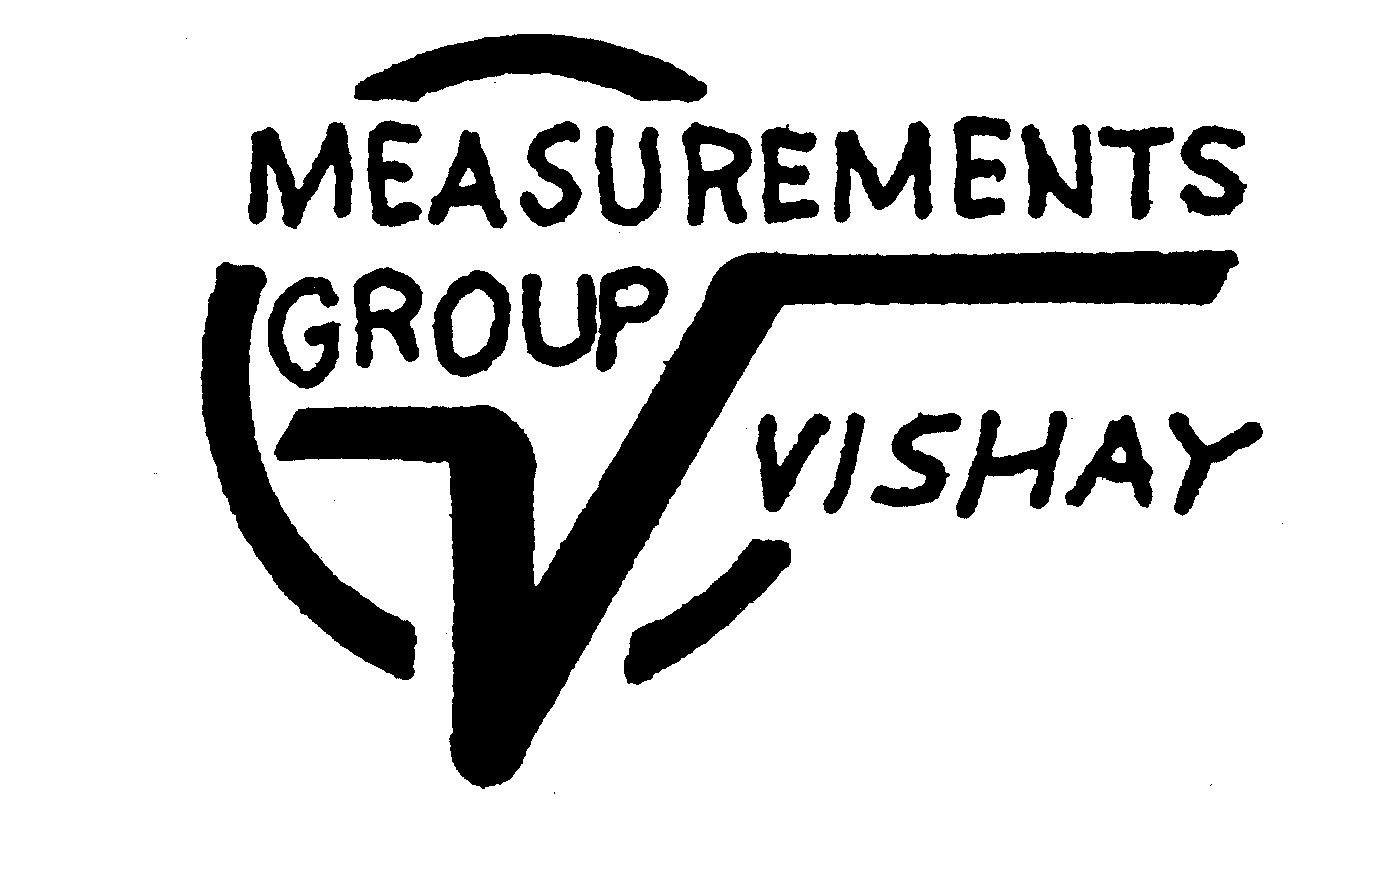  MEASUREMENTS GROUP VISHAY V